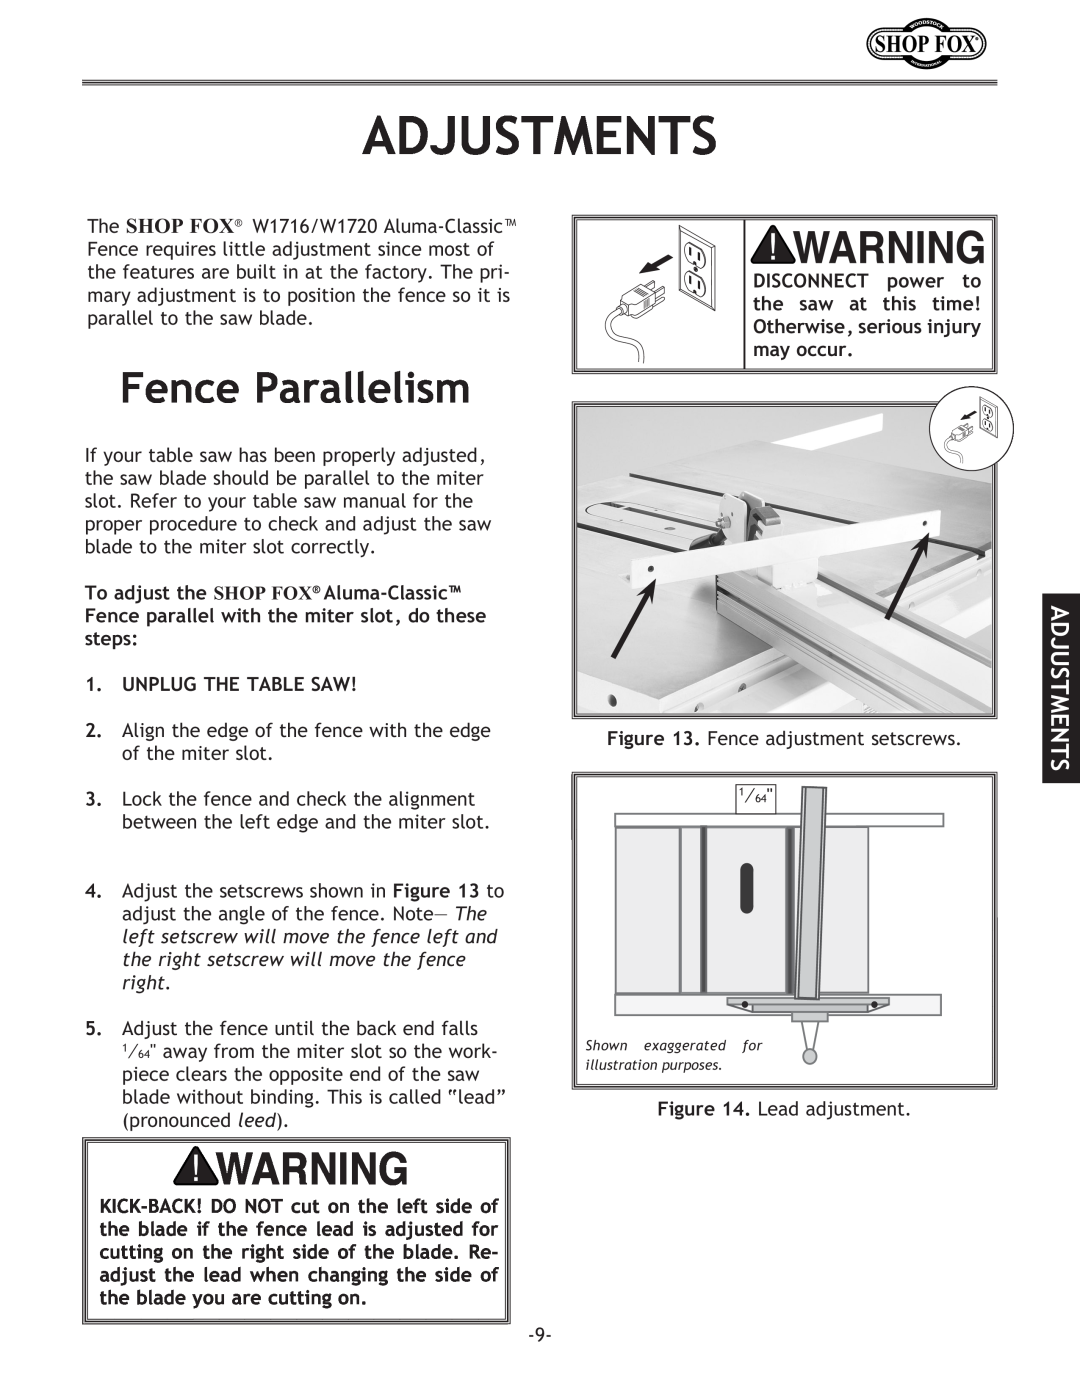 Woodstock W1720, W1716 instruction manual Adjustments, Fence Parallelism 